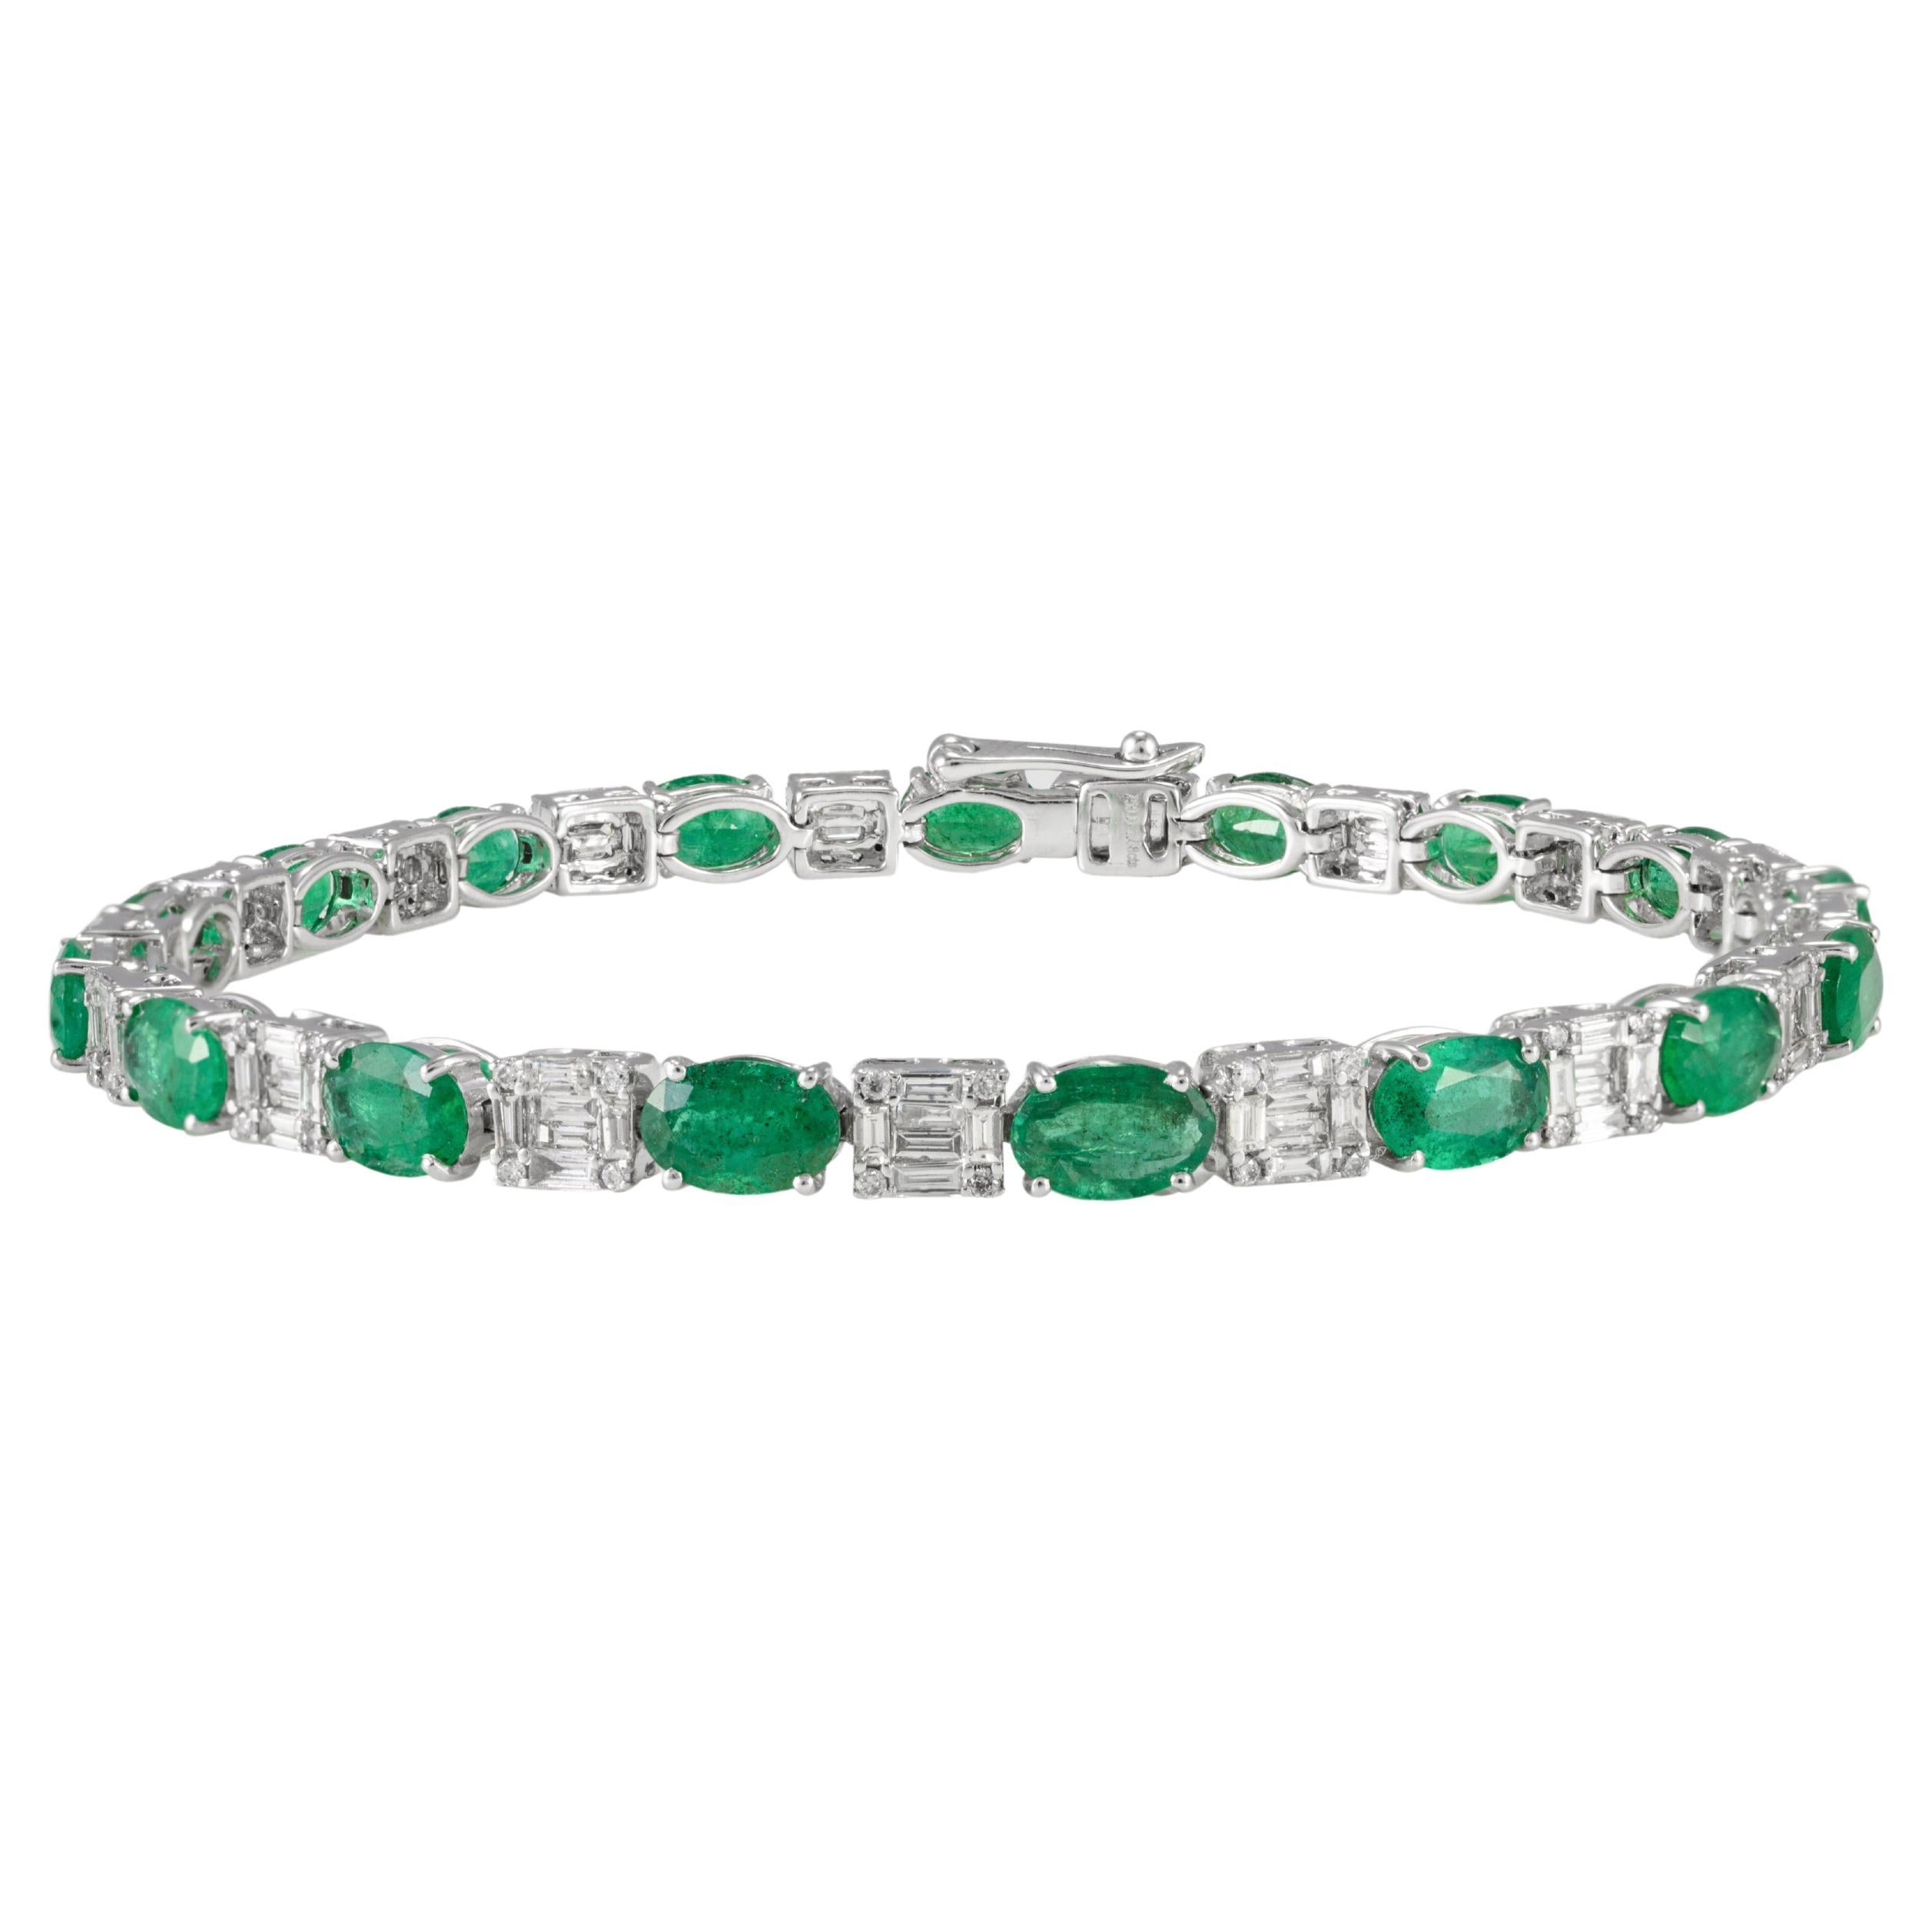 Solid 18k White Gold 6.64 Carat Natural Emerald and Diamond Tennis Bracelet